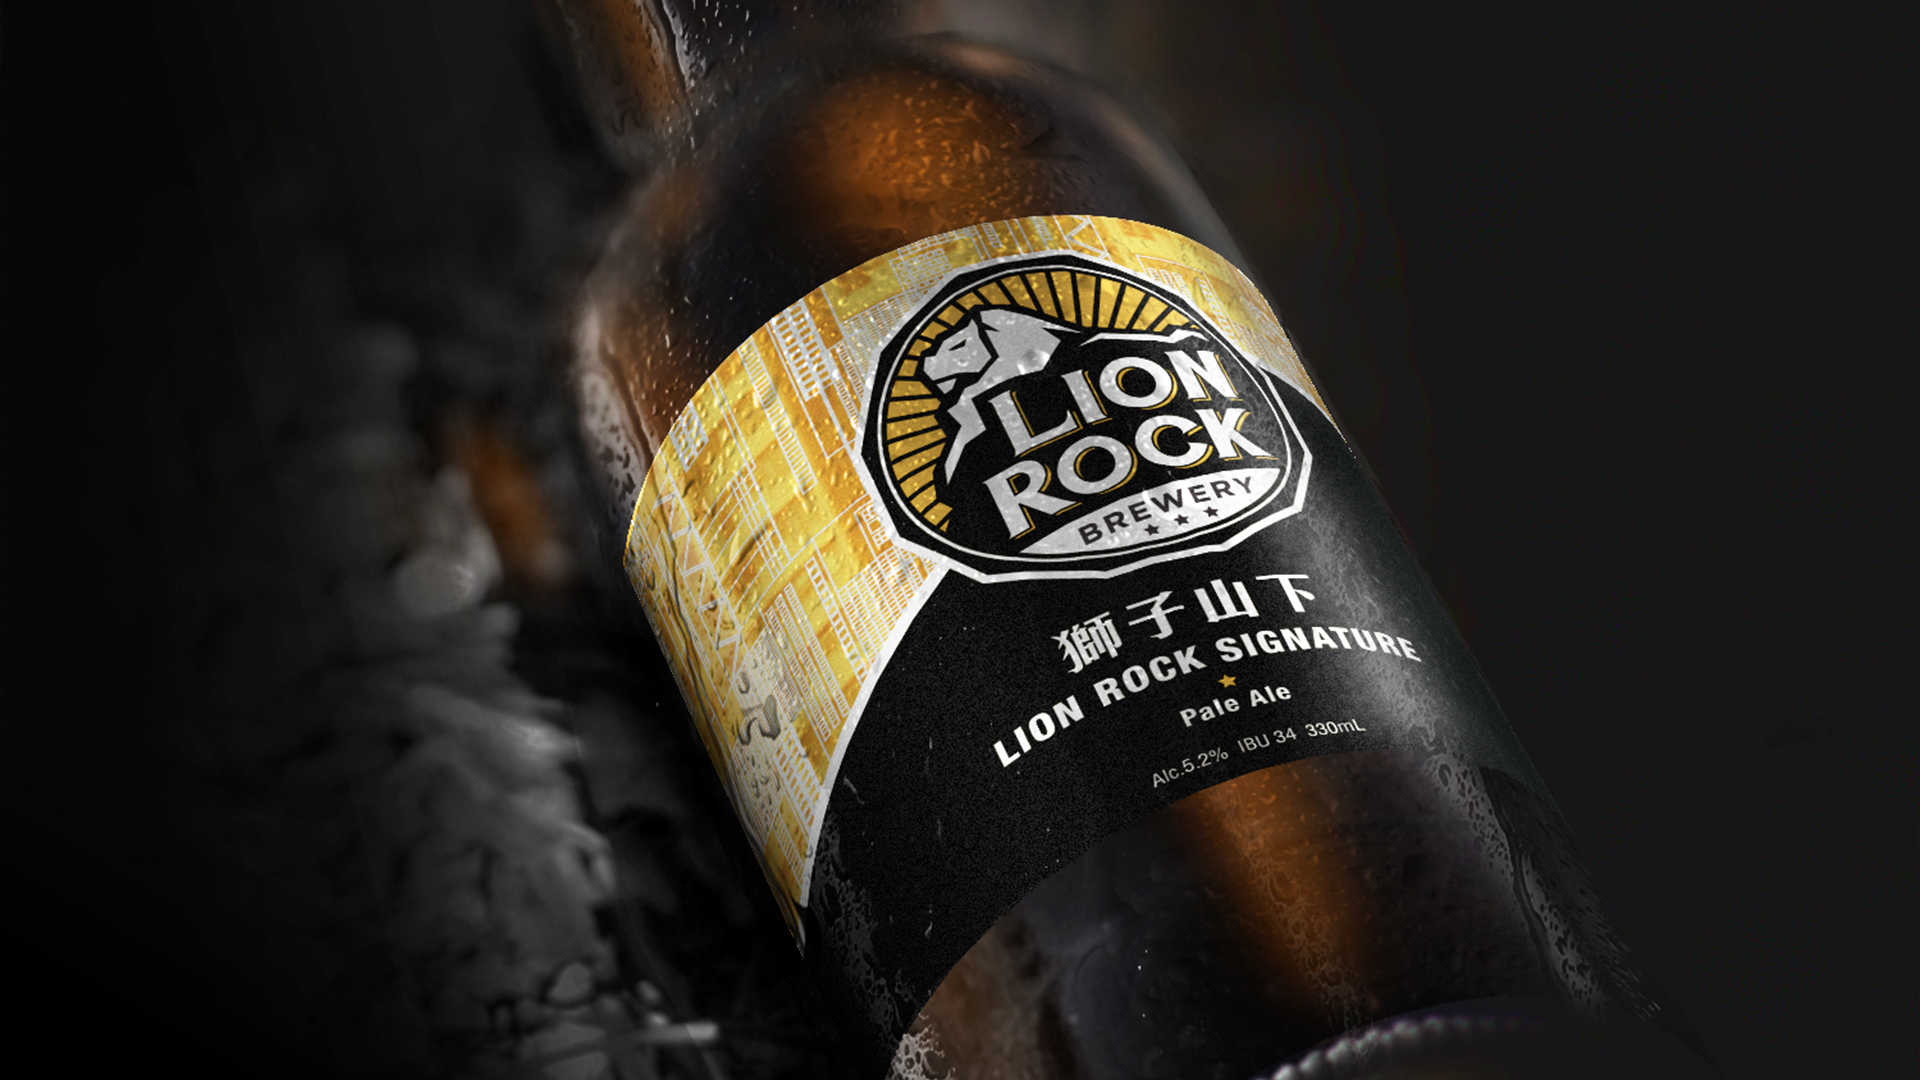 Lion Rock Brewery Branding